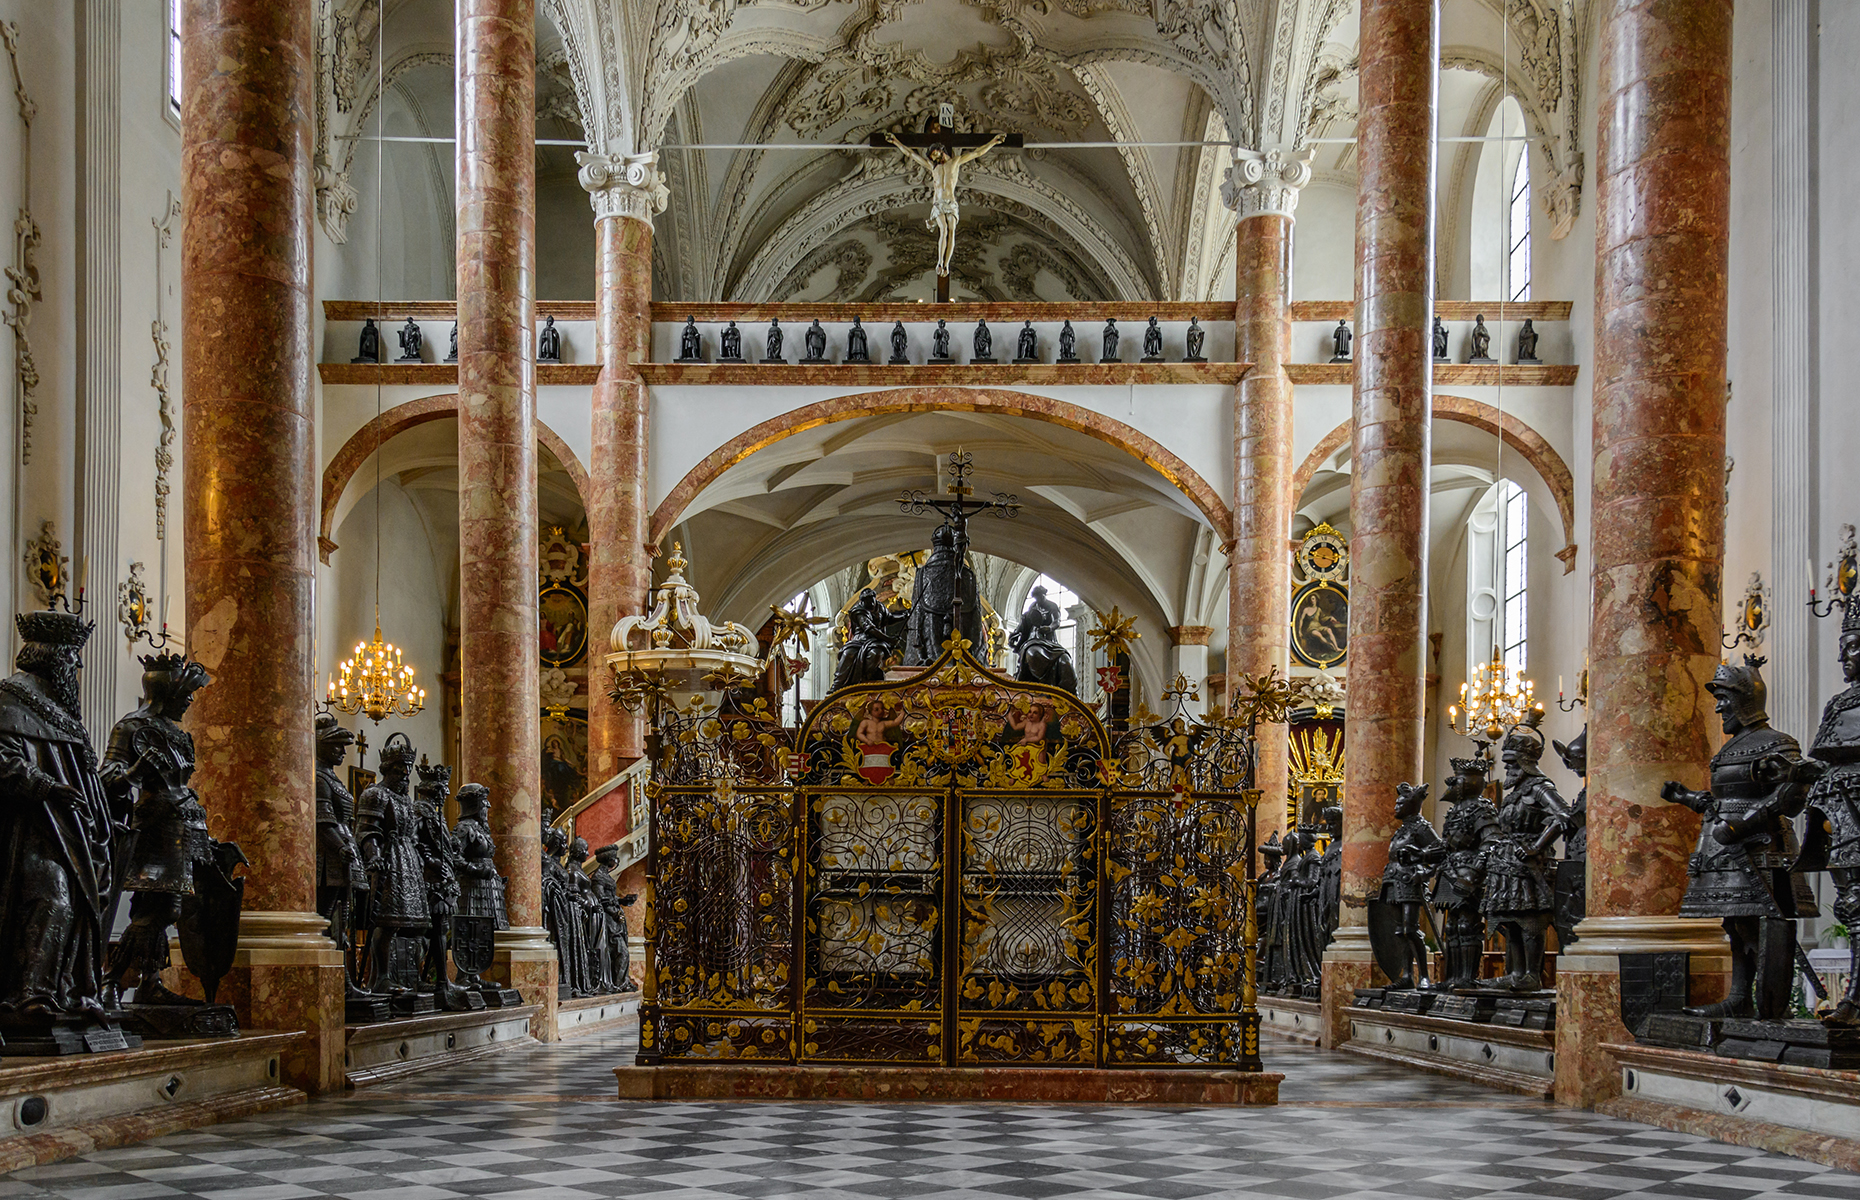 Church in Innsbruck (Image: Andrey Shcherbukhin/Shutterstock)